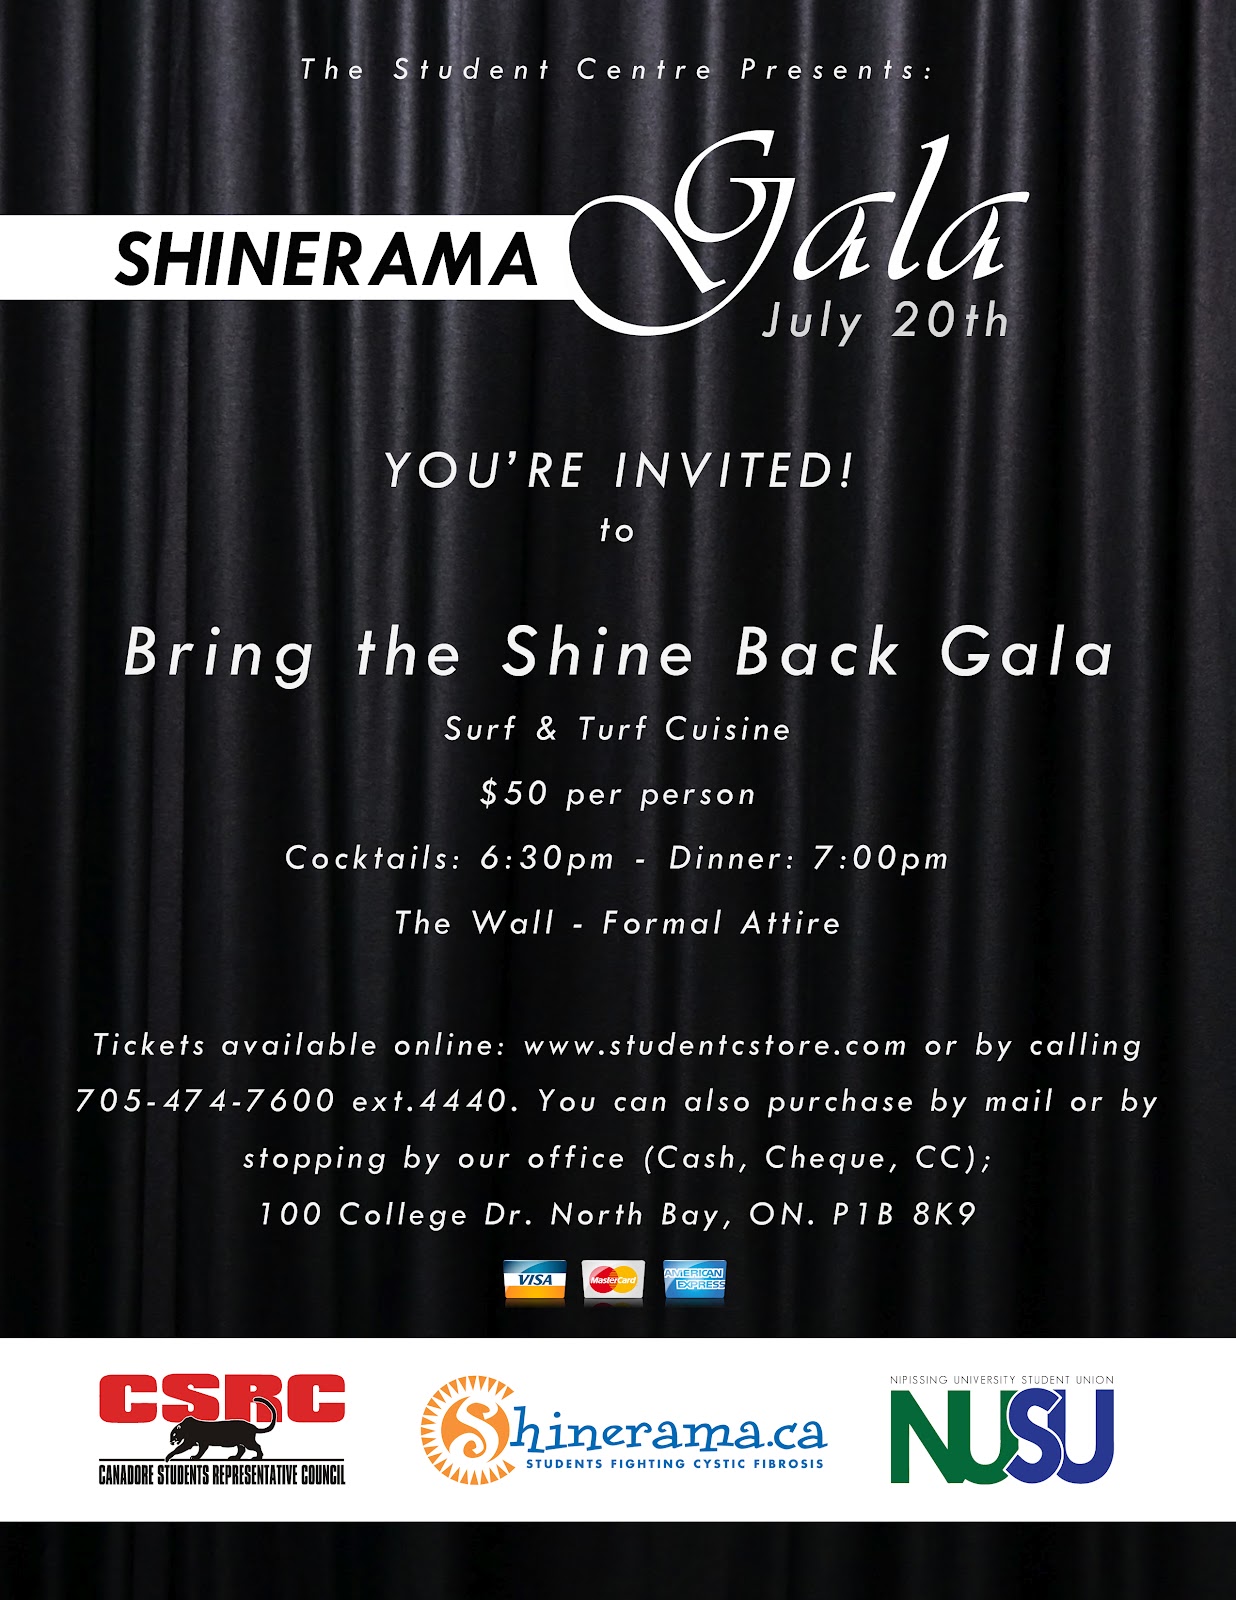 charity gala invitation